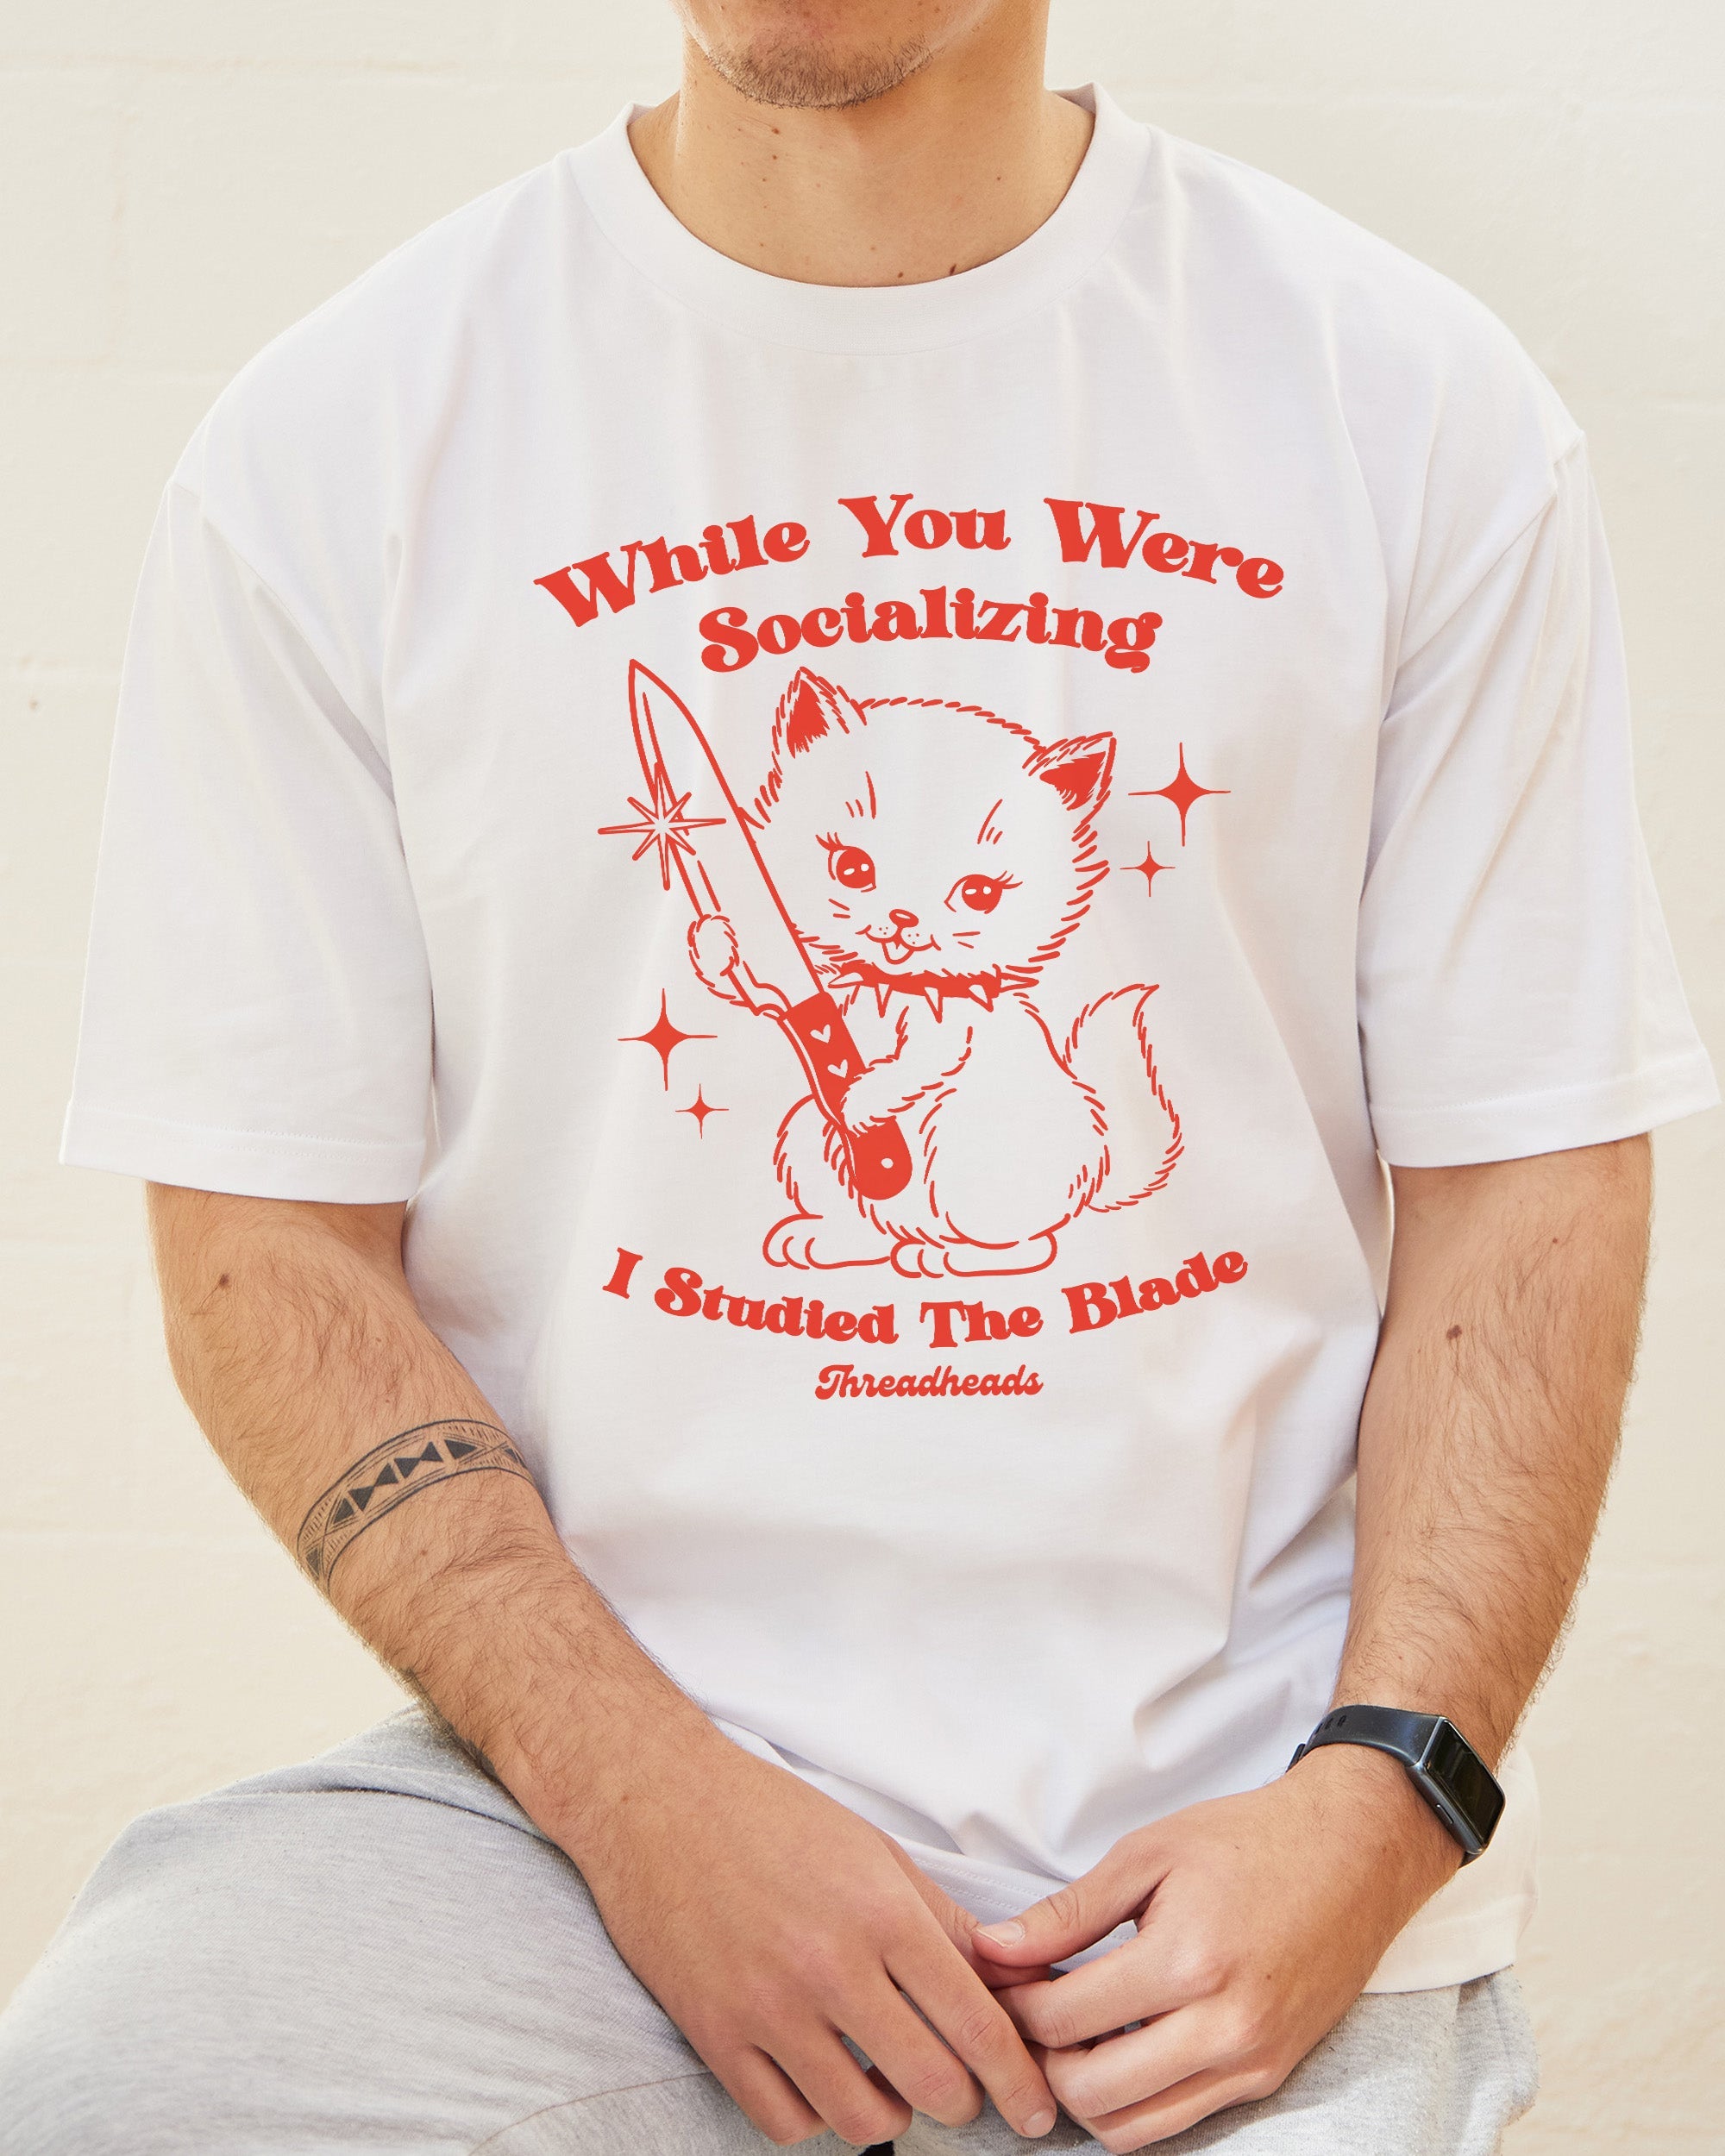 Studied The Blade T-Shirt Australia Online White